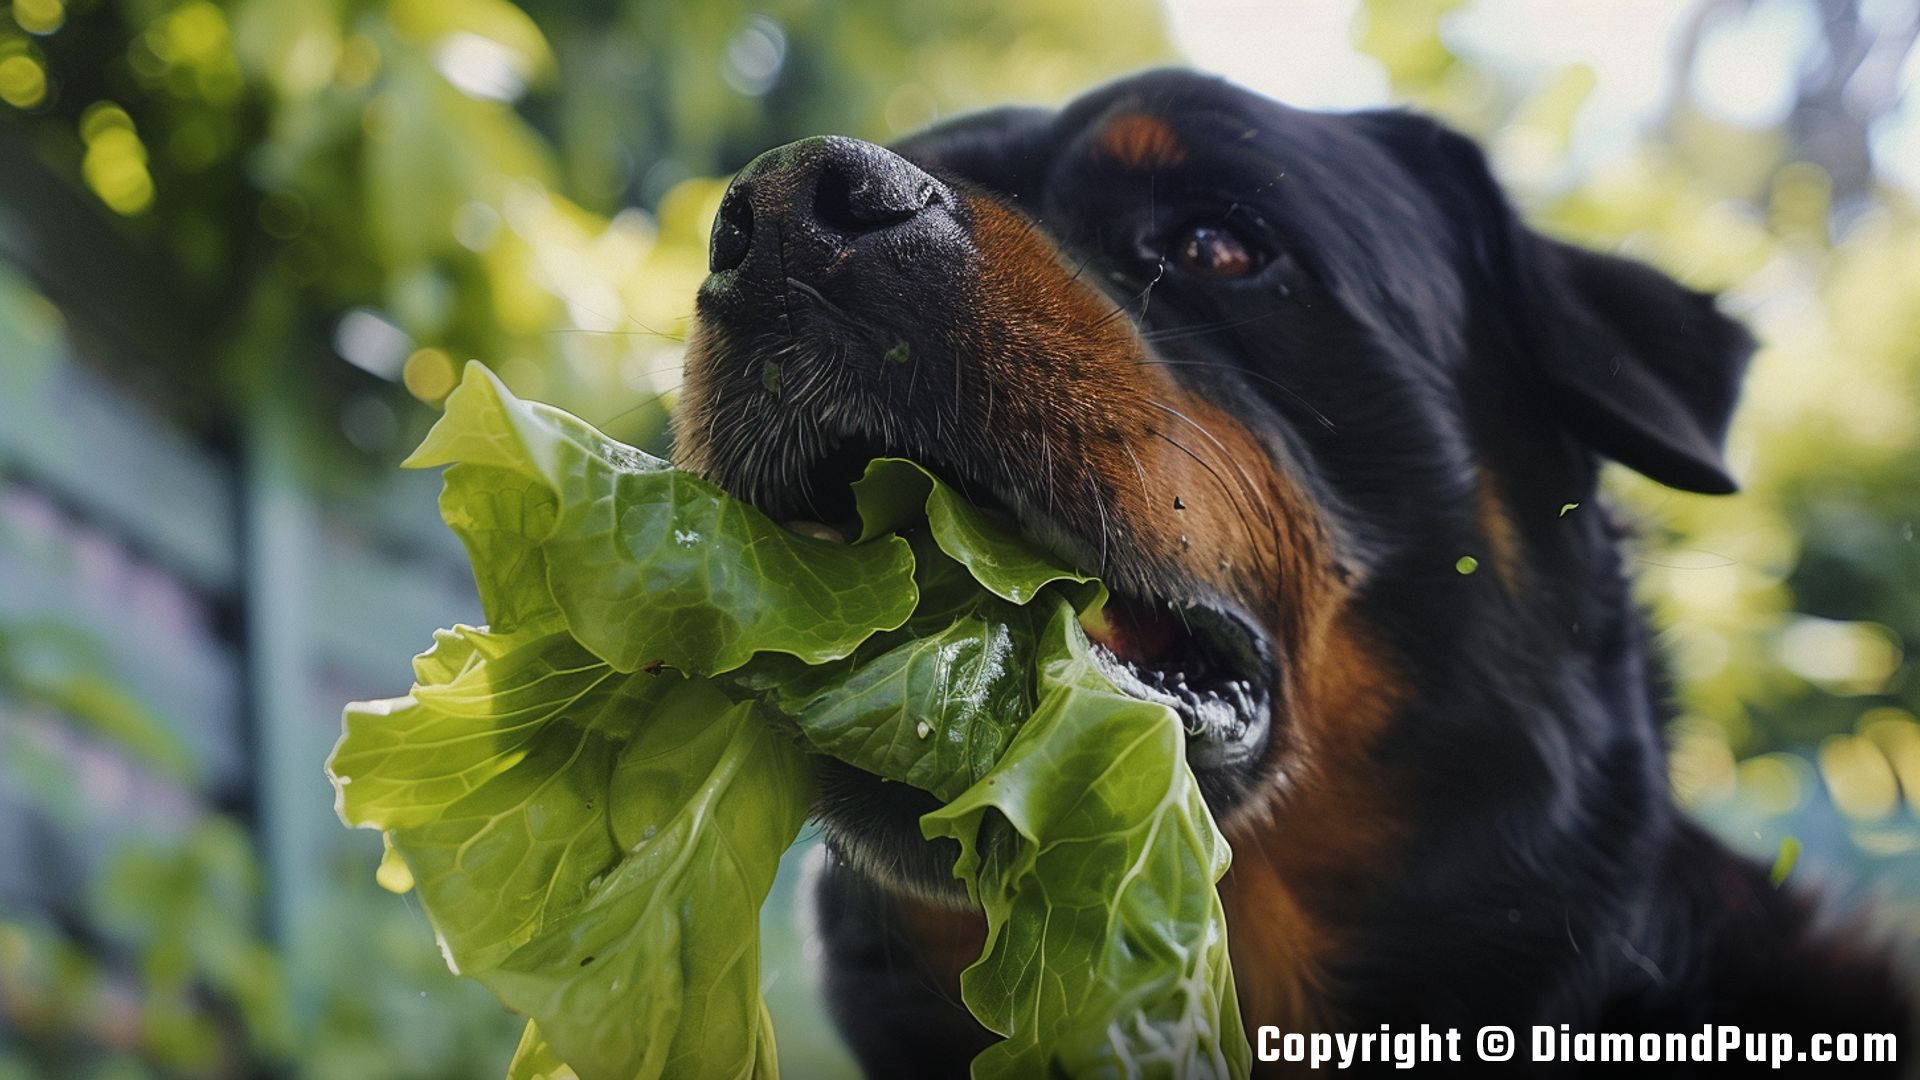 Image of a Playful Rottweiler Eating Lettuce